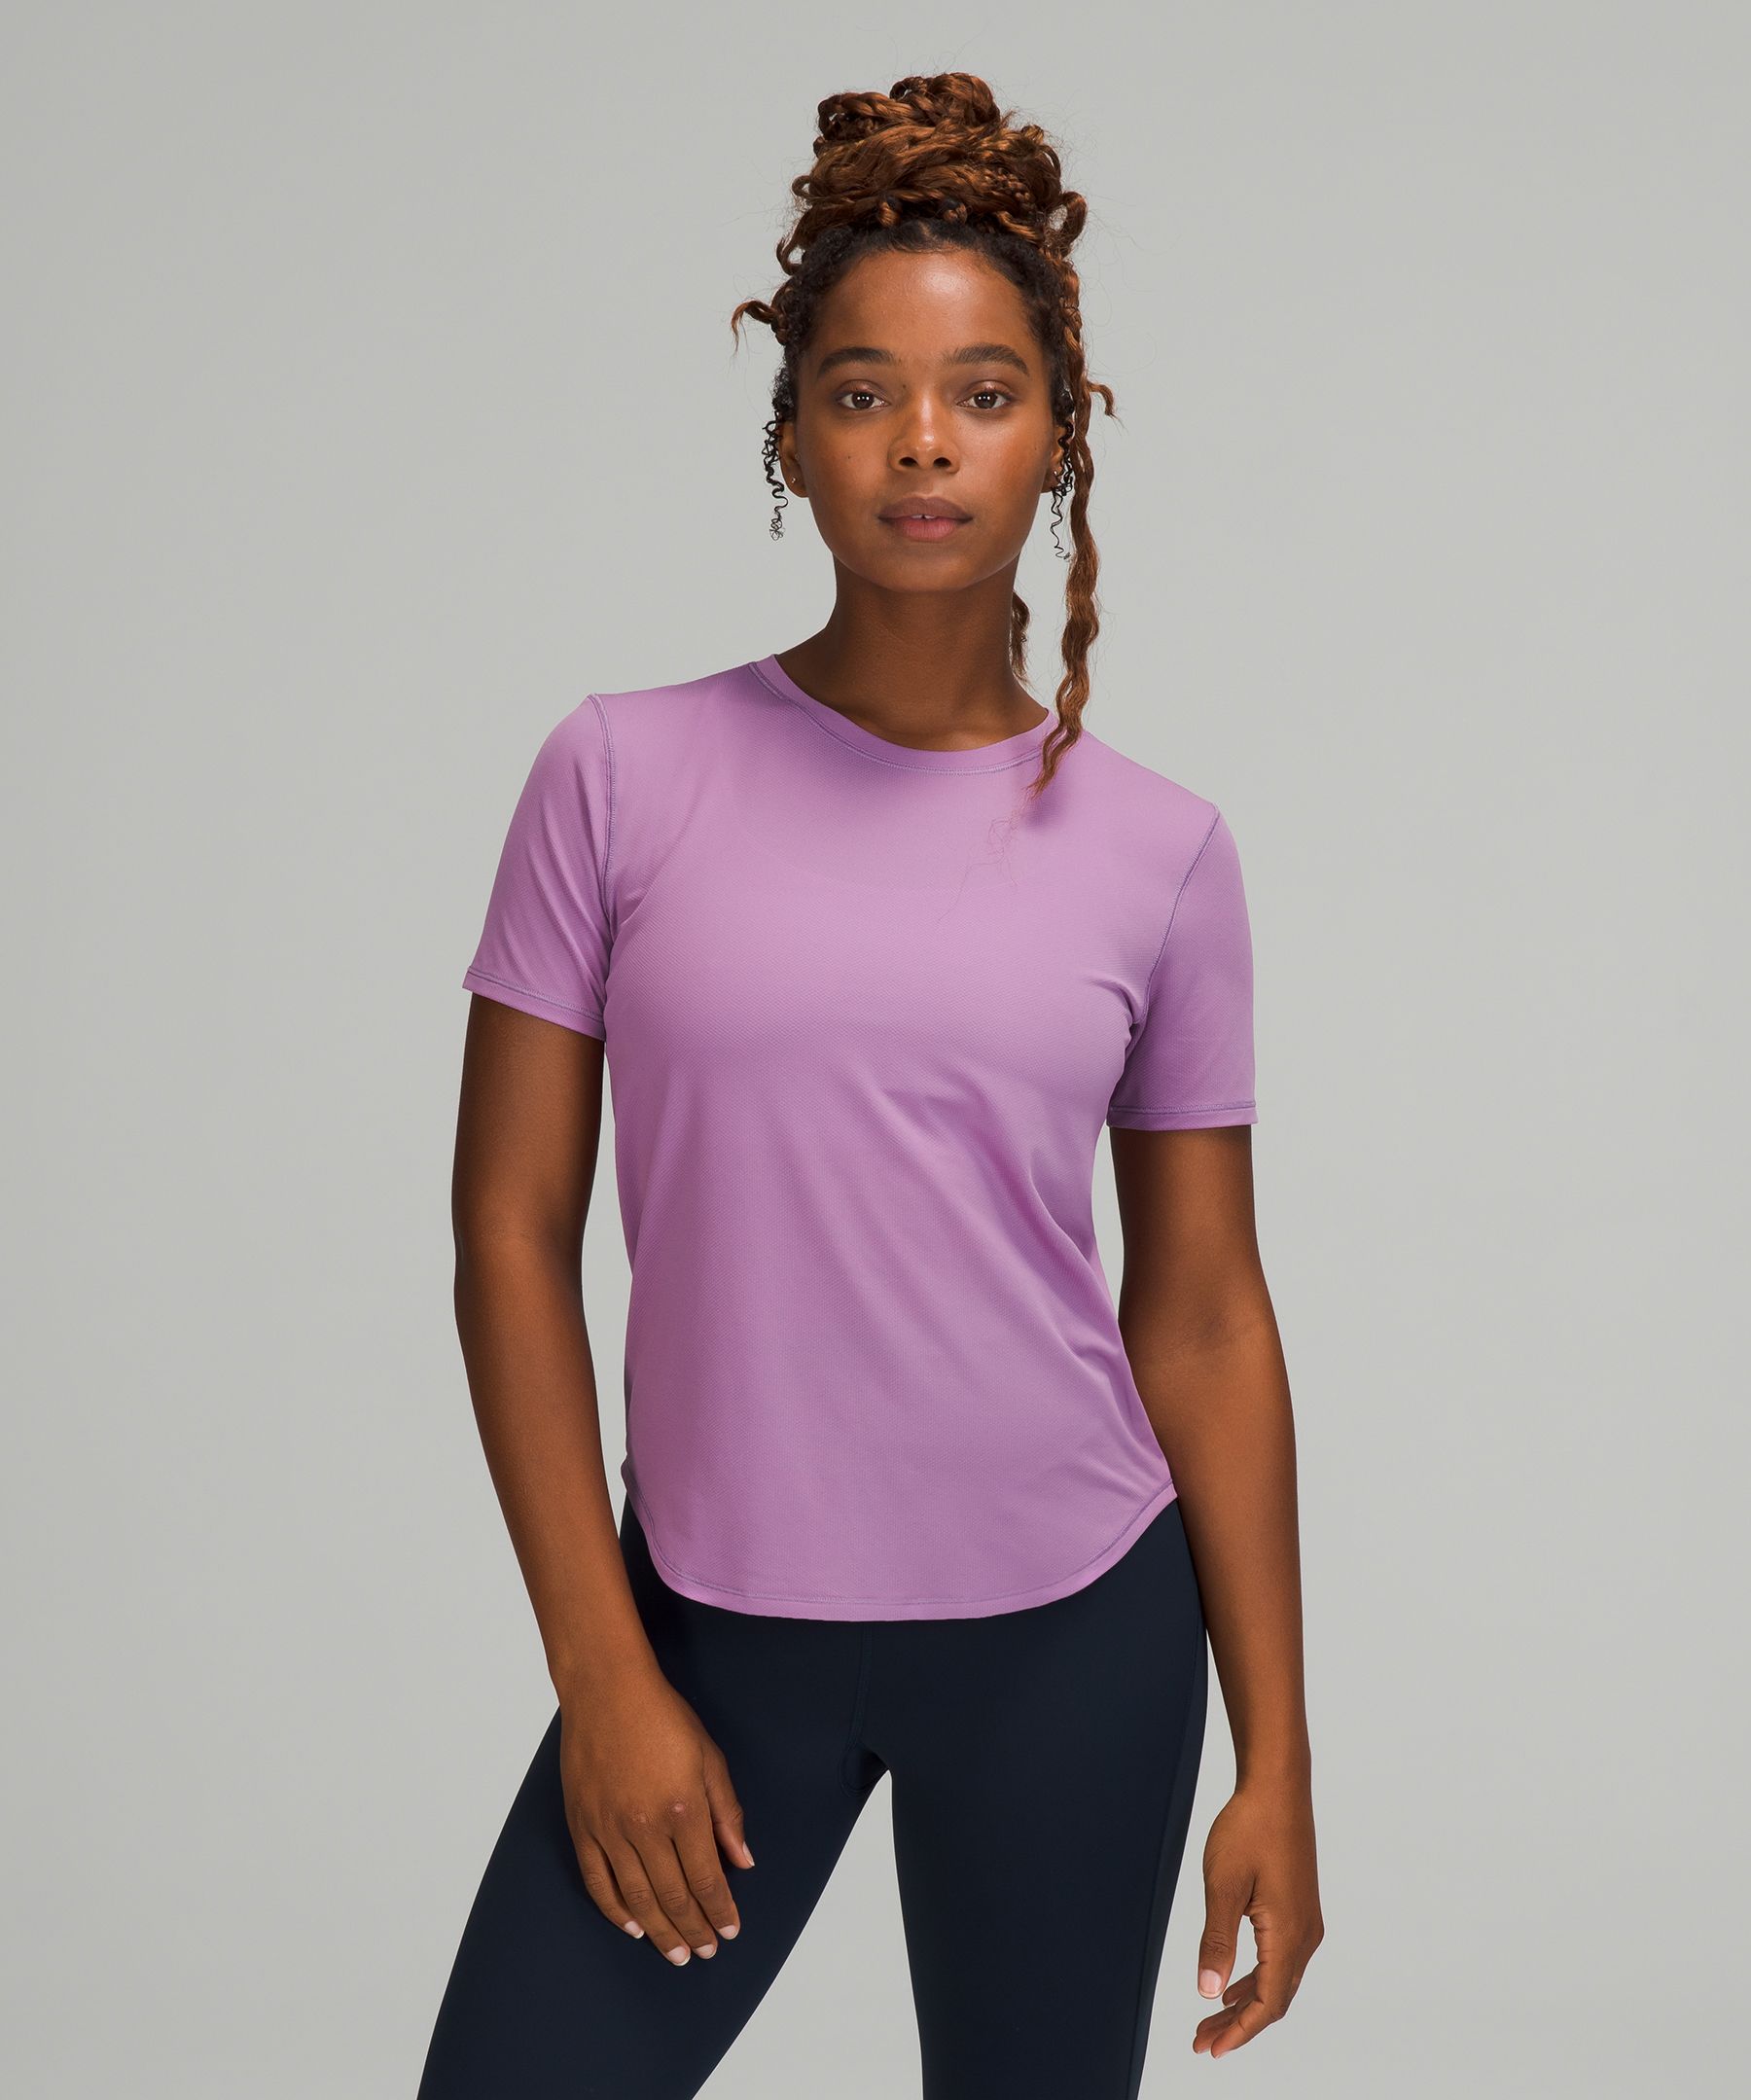 Lululemon High Neck Running And Training T-shirt In Wisteria Purple